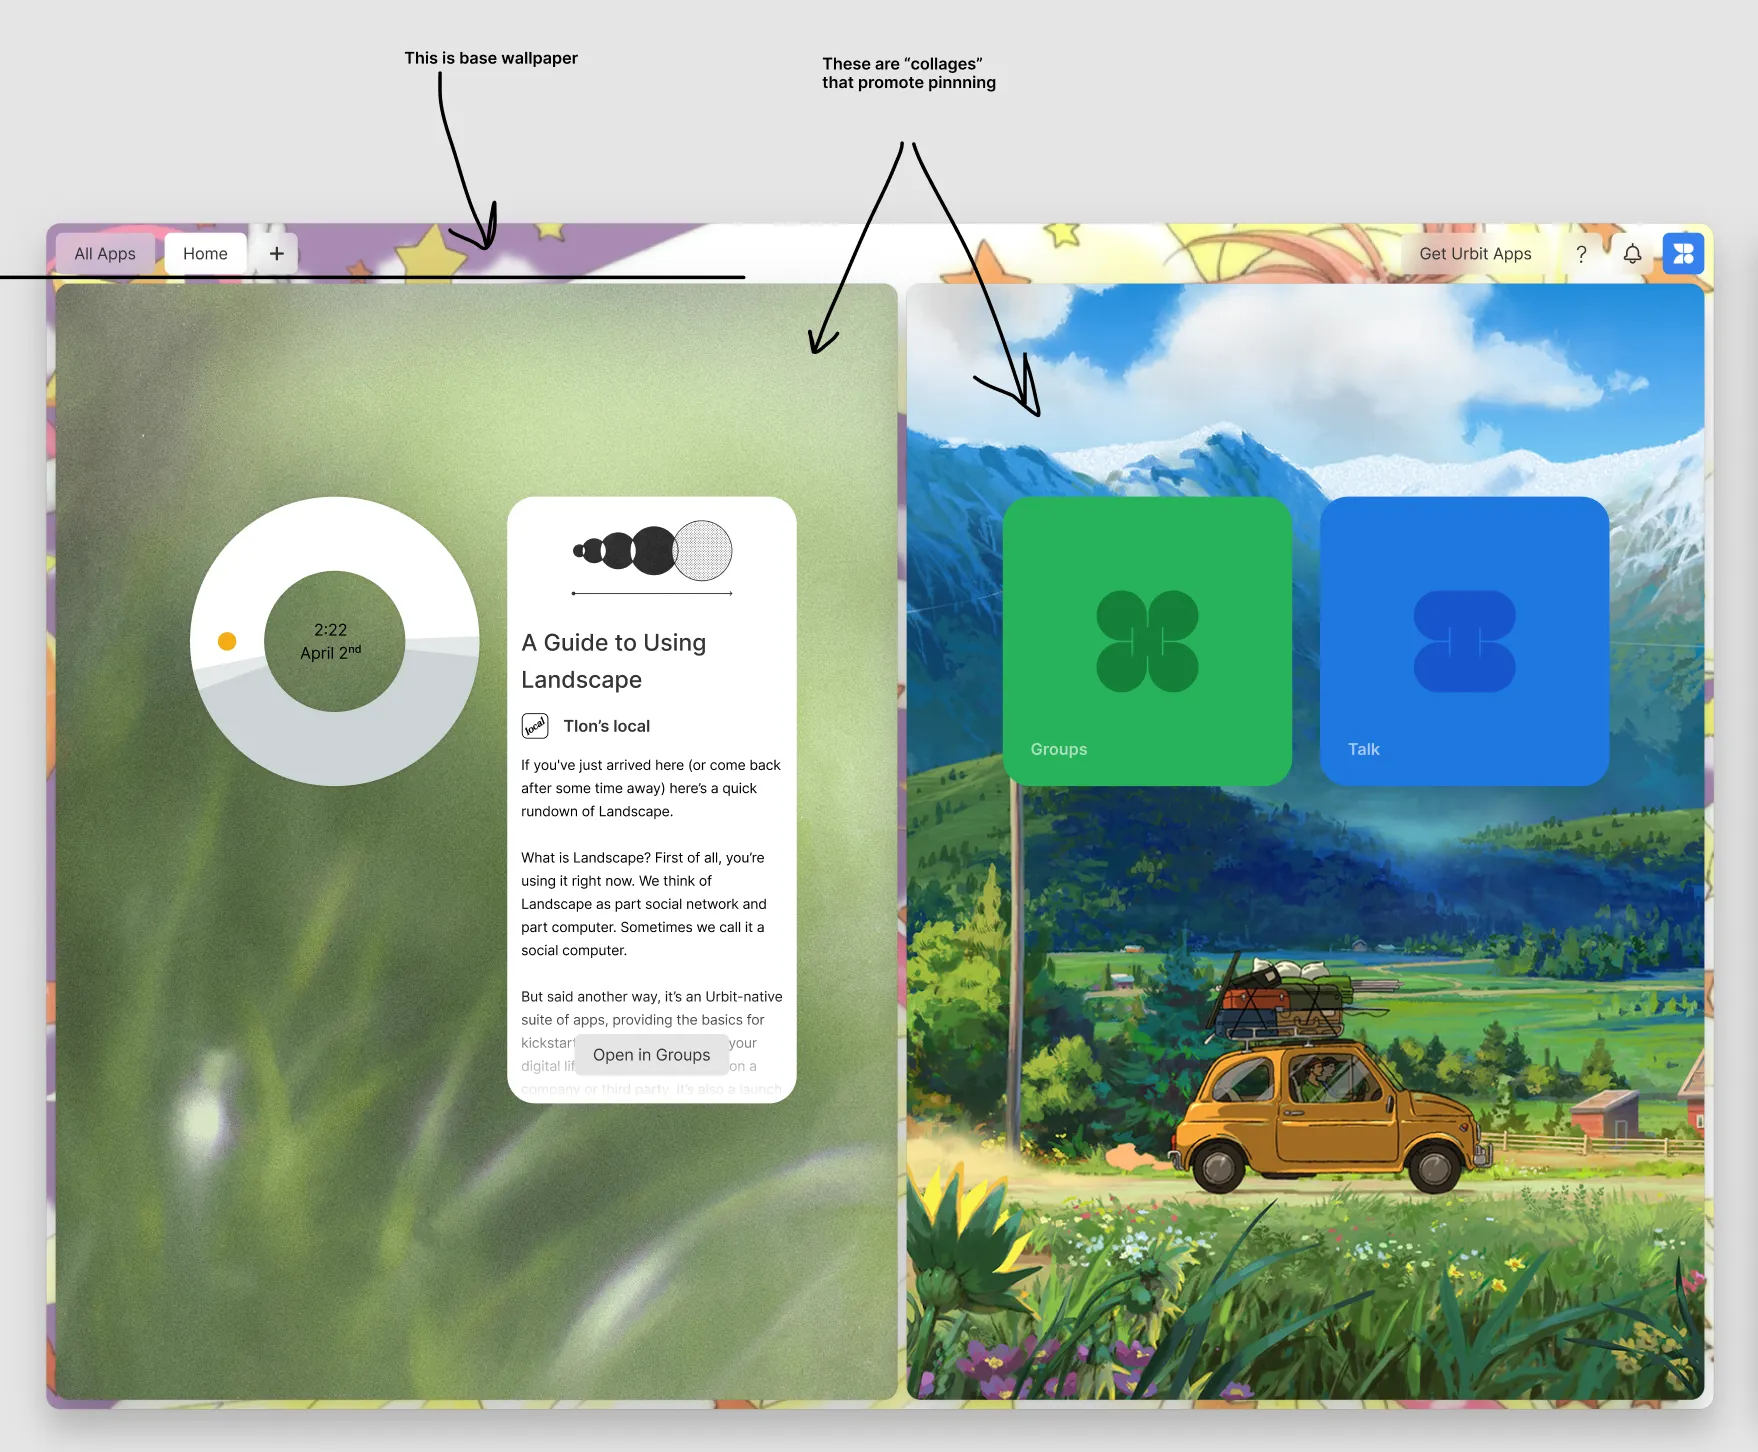 A screenshot of a Surface design showcasing wallpaper customization possibilities